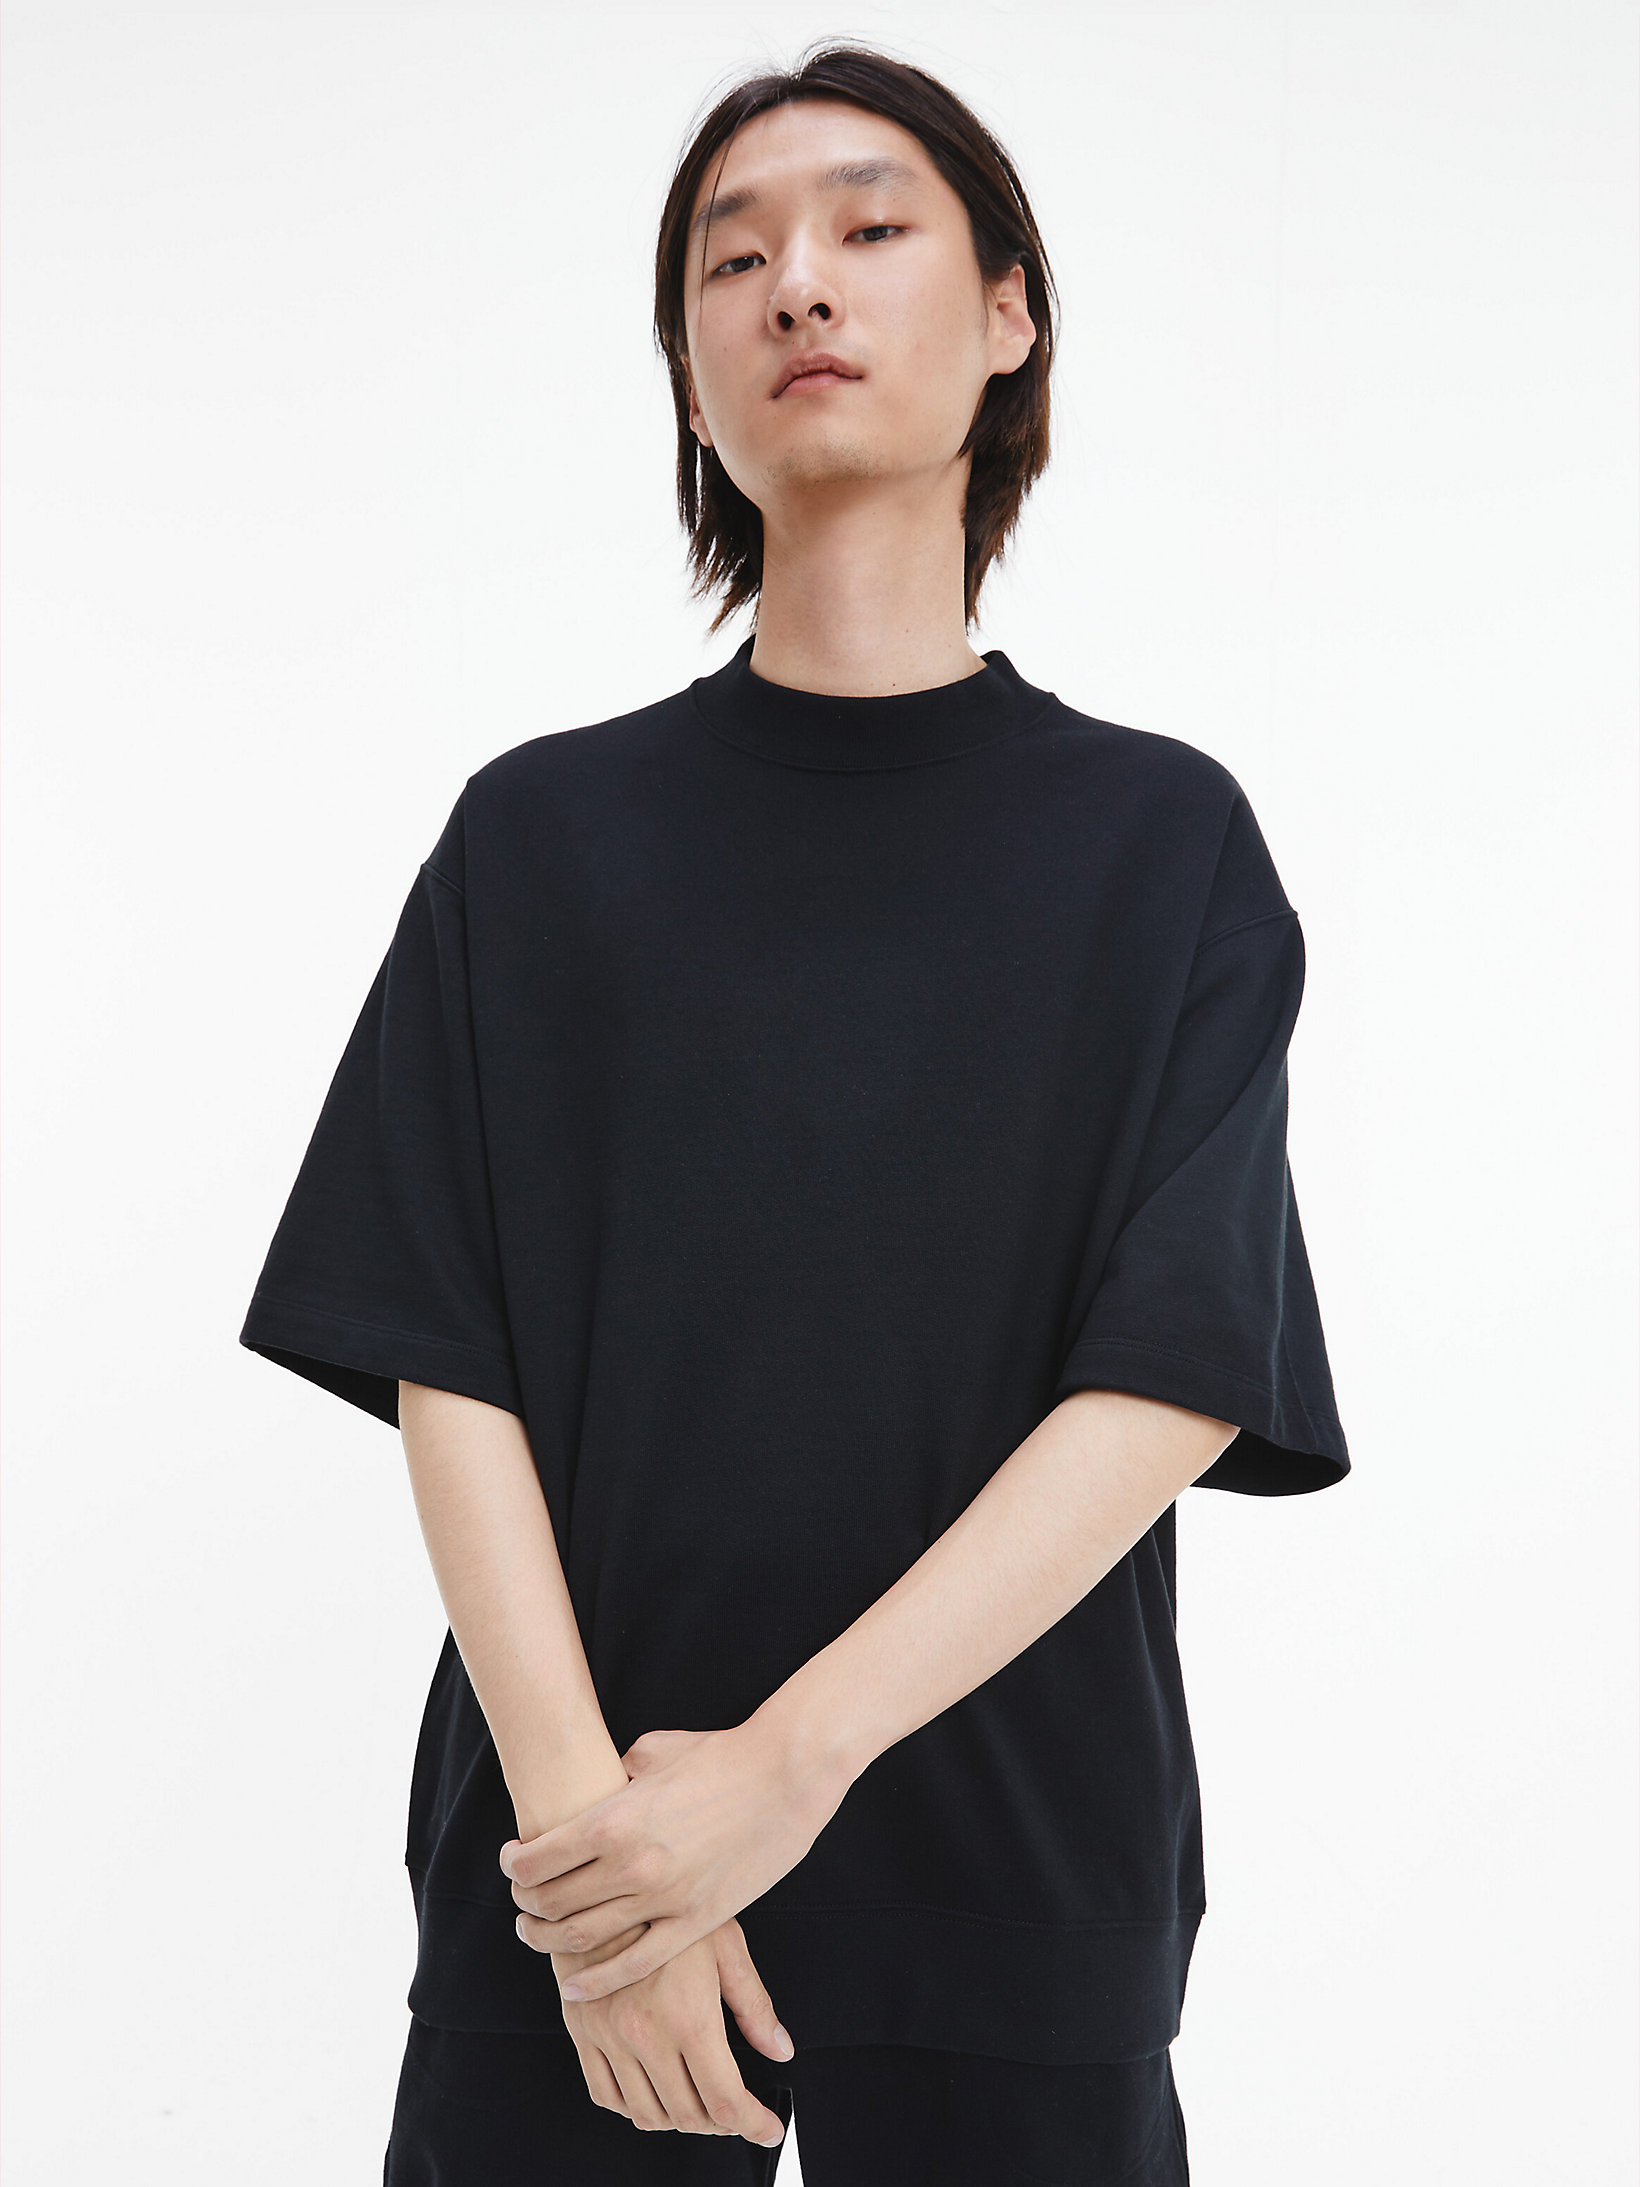 Black Beauty Unisex Short Sleeve Sweatshirt - CK Standards undefined unisex Calvin Klein